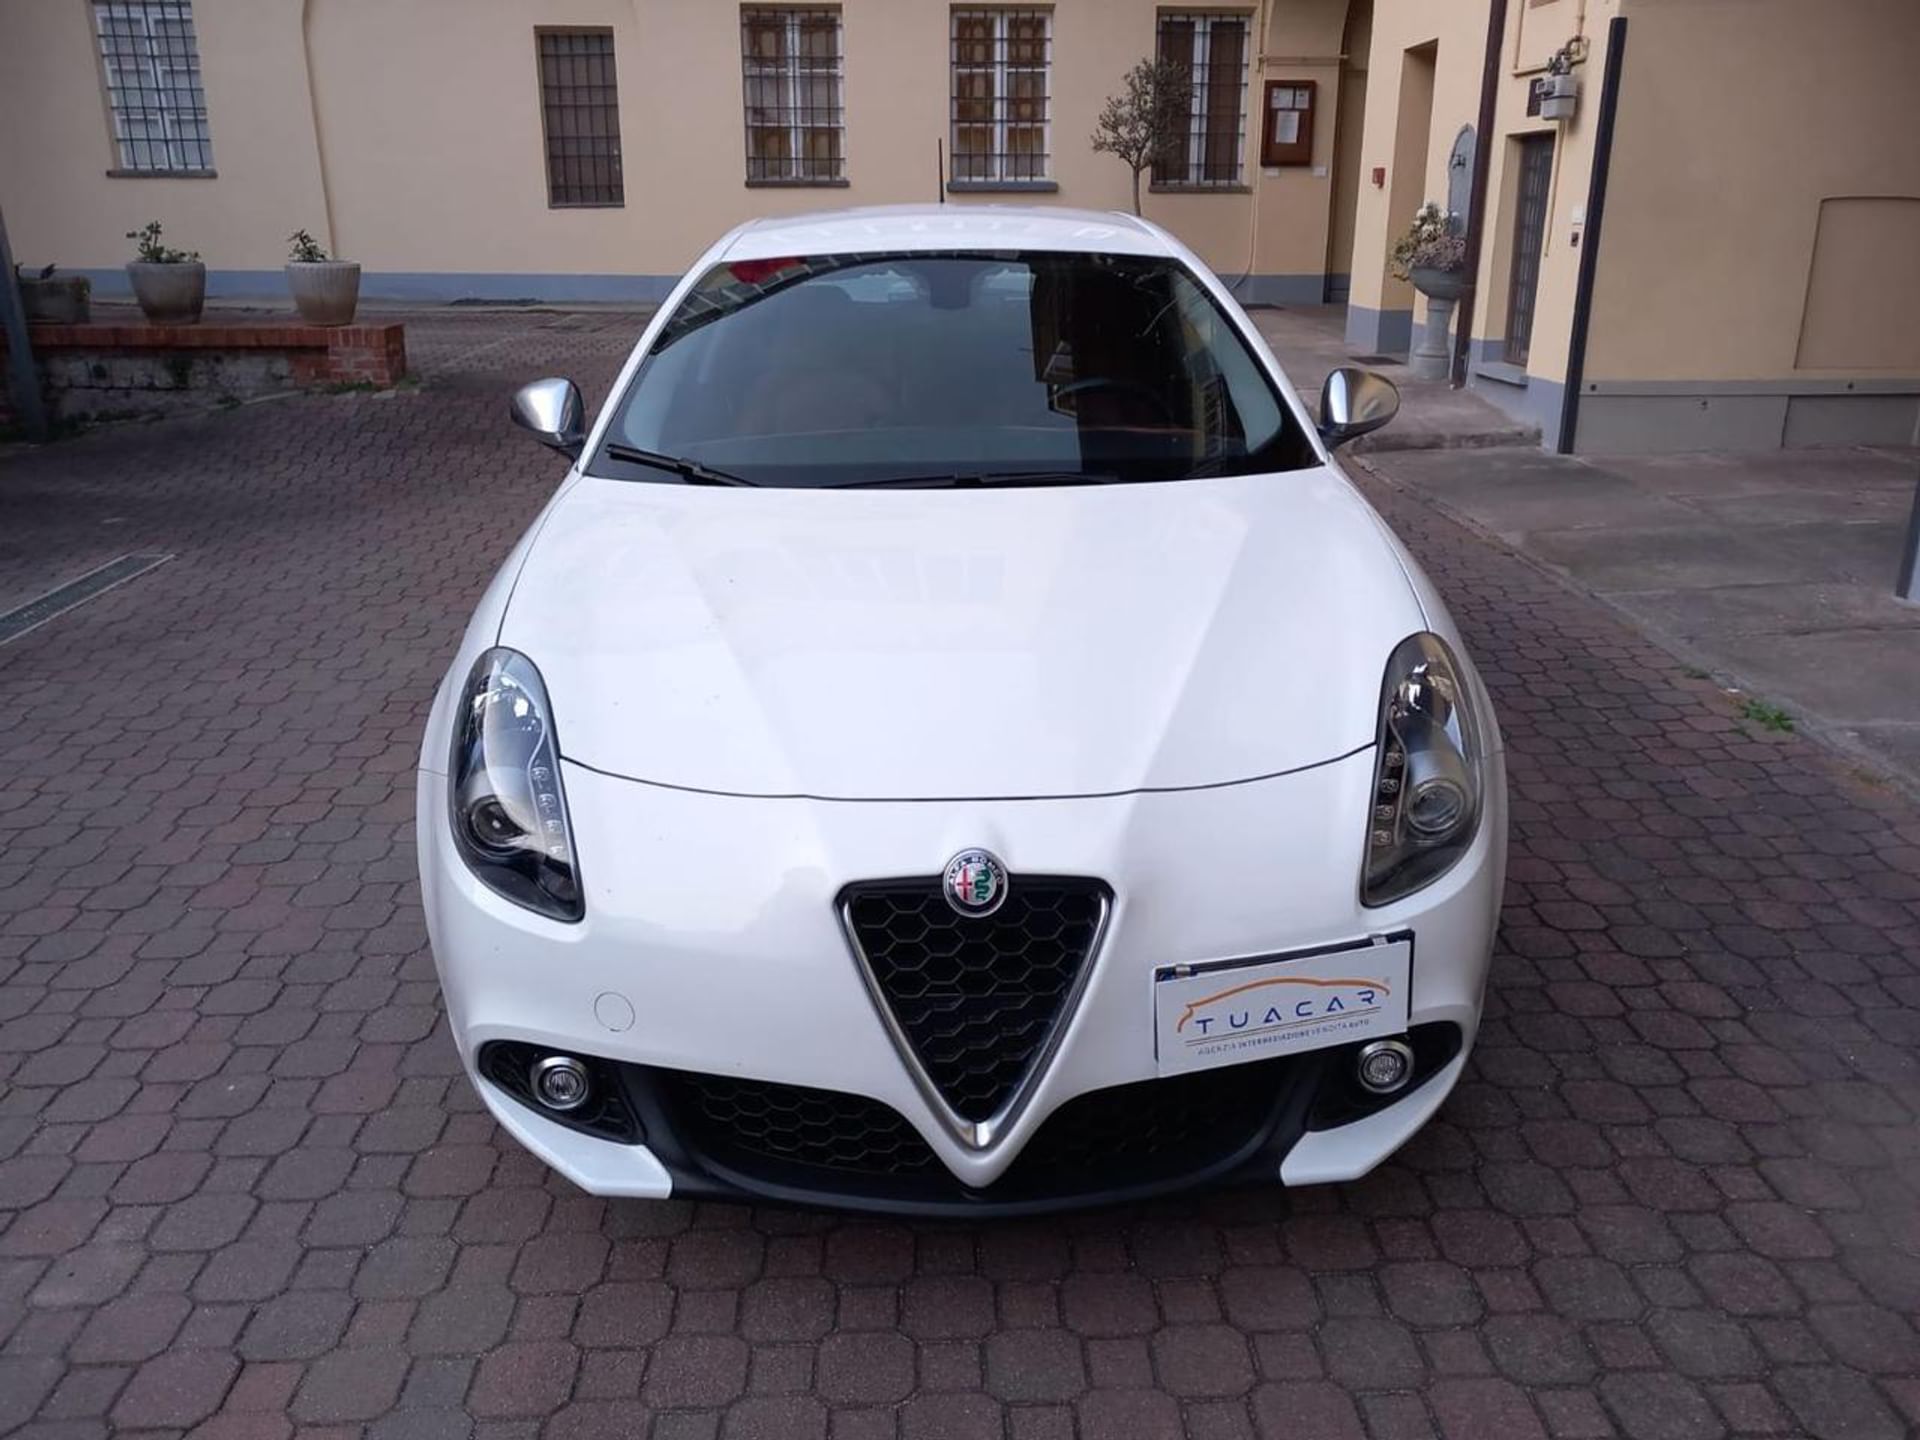 Acquista Alfa romeo Giulietta usate - Autosupermarket